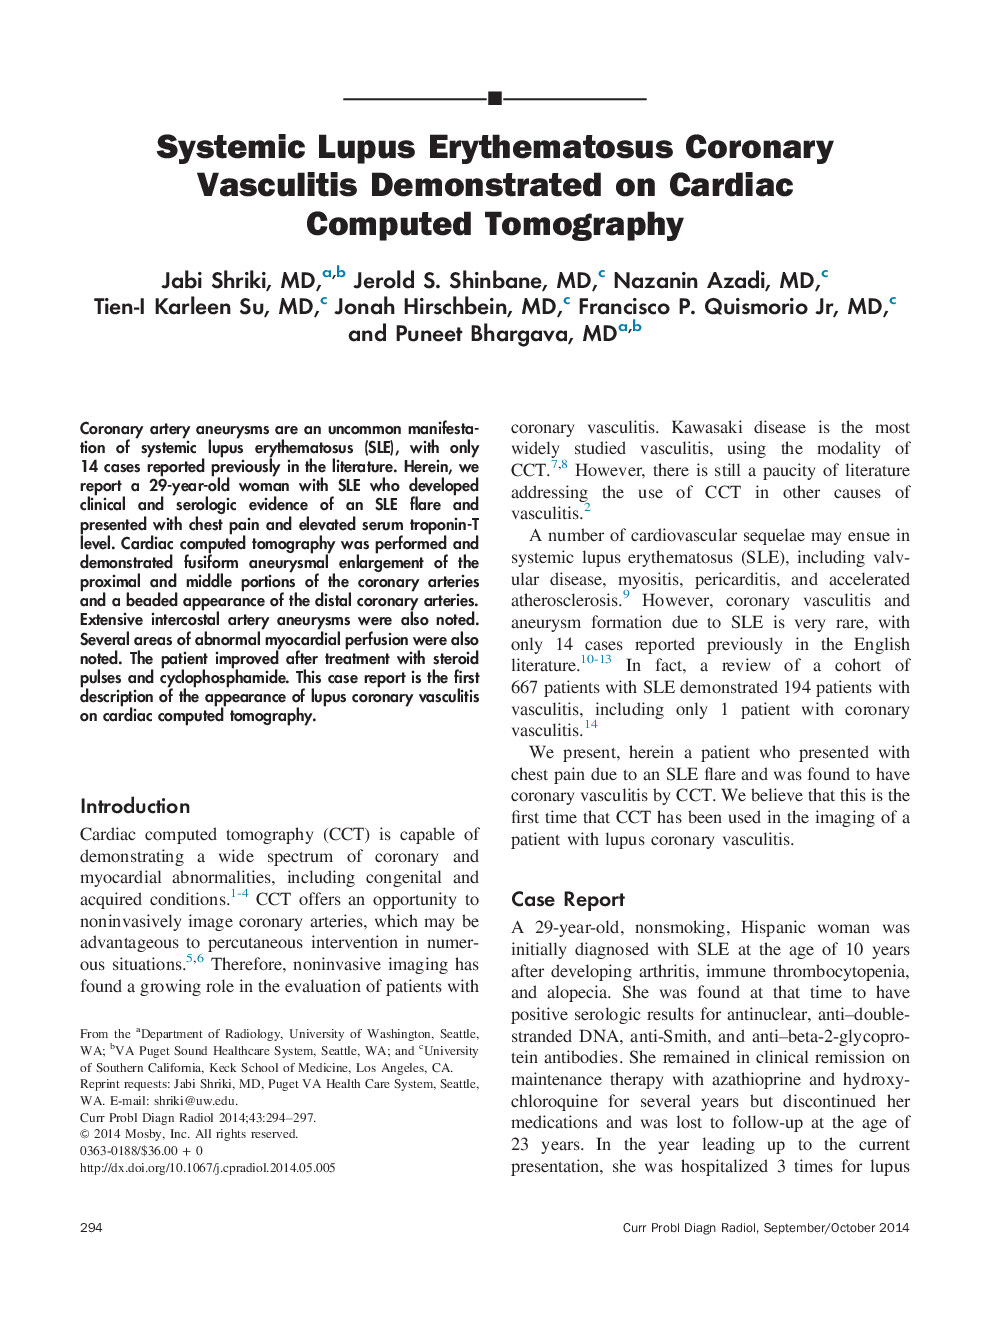 Systemic Lupus Erythematosus Coronary Vasculitis Demonstrated on Cardiac Computed Tomography